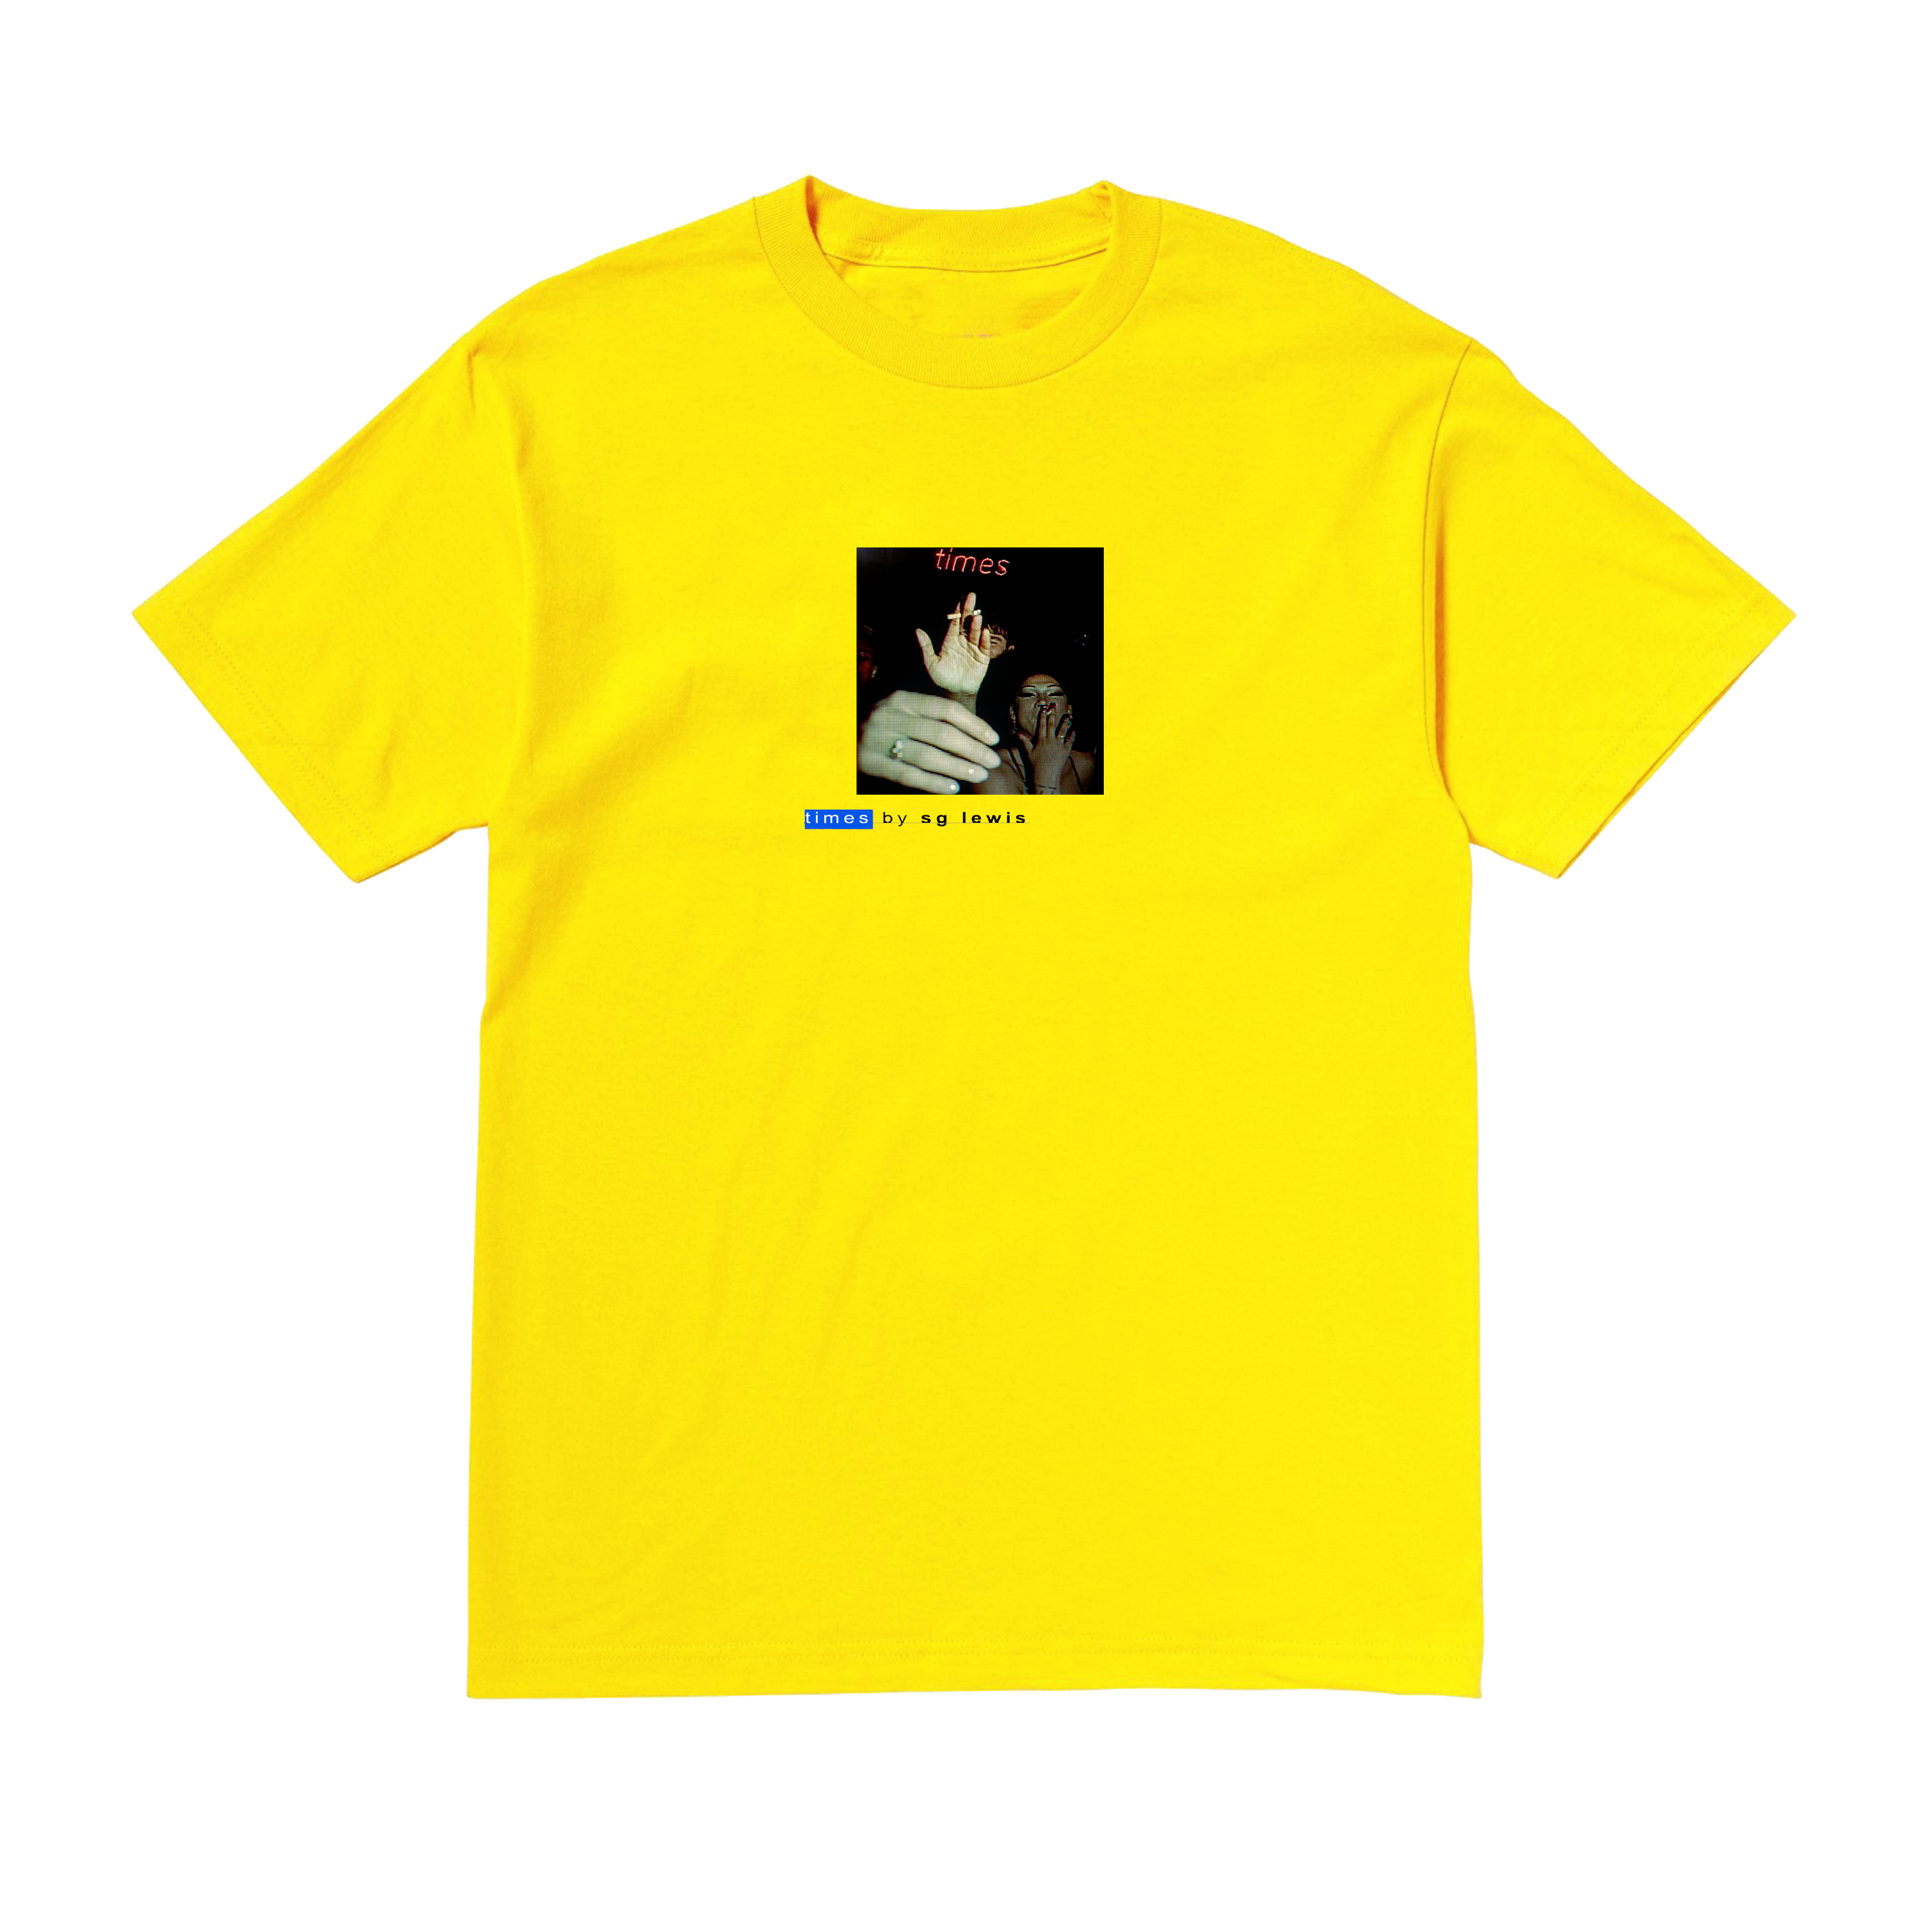 SG Lewis - SG Lewis Cigarette Yellow T-Shirt